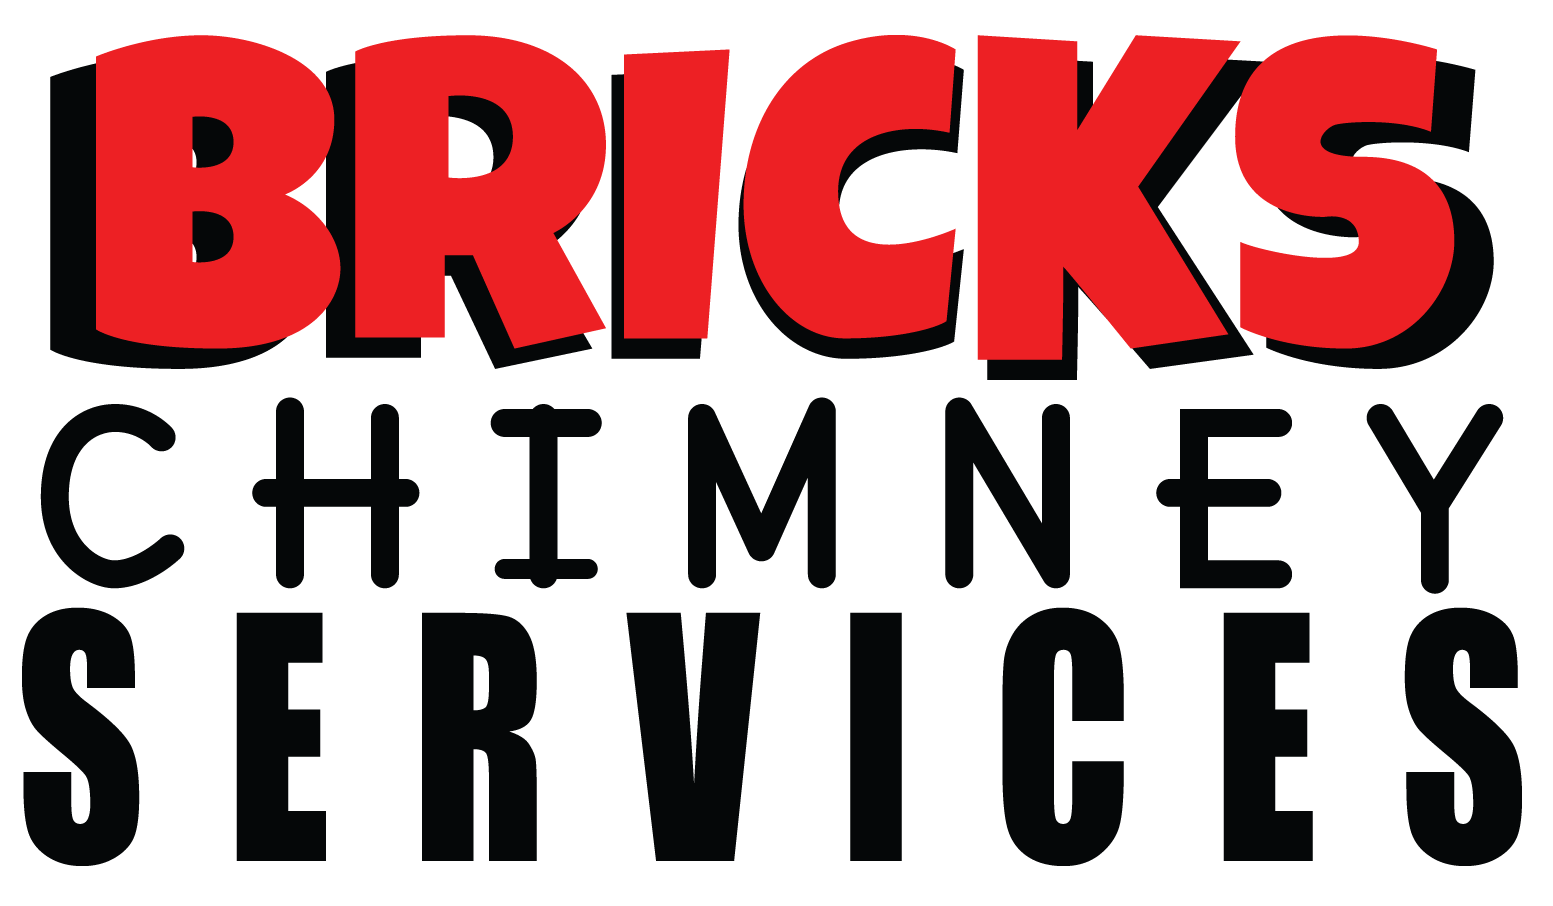 Bricks Chimney Services Logo